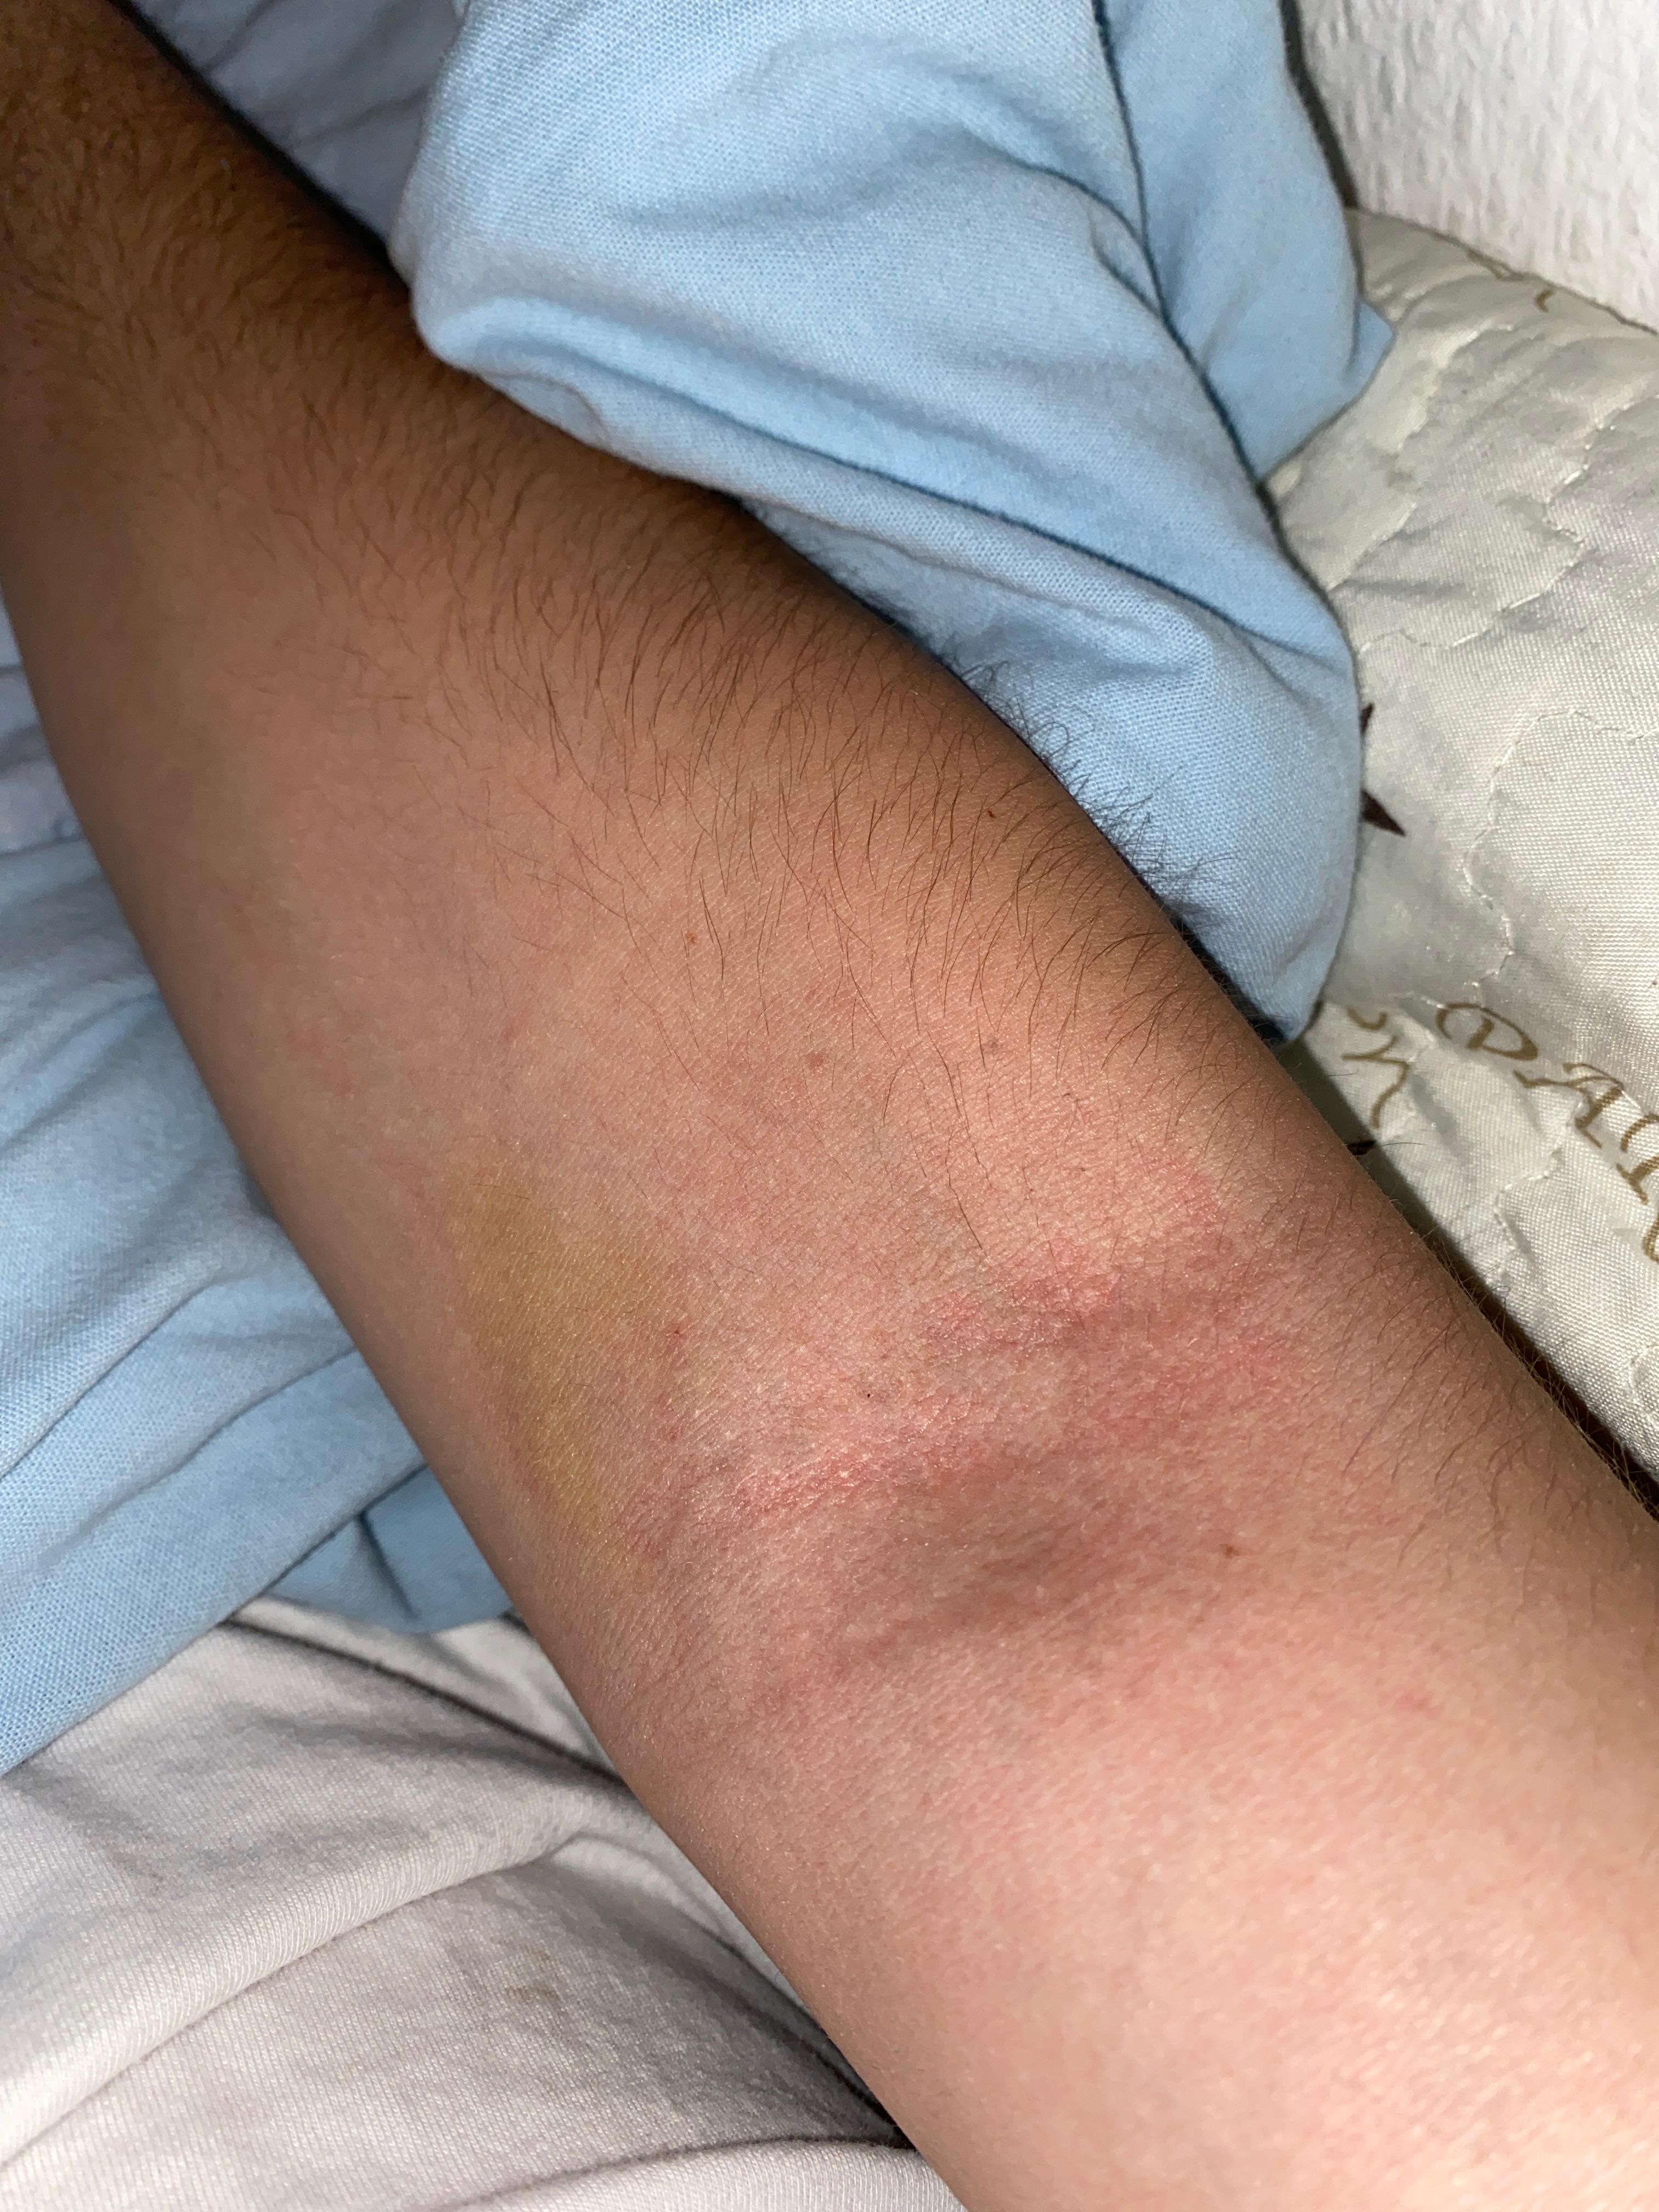 50+ Thrombose im arm bilder , Trombose Im Arm / Thrombose Wikipedia / Eine thrombose im arm ist